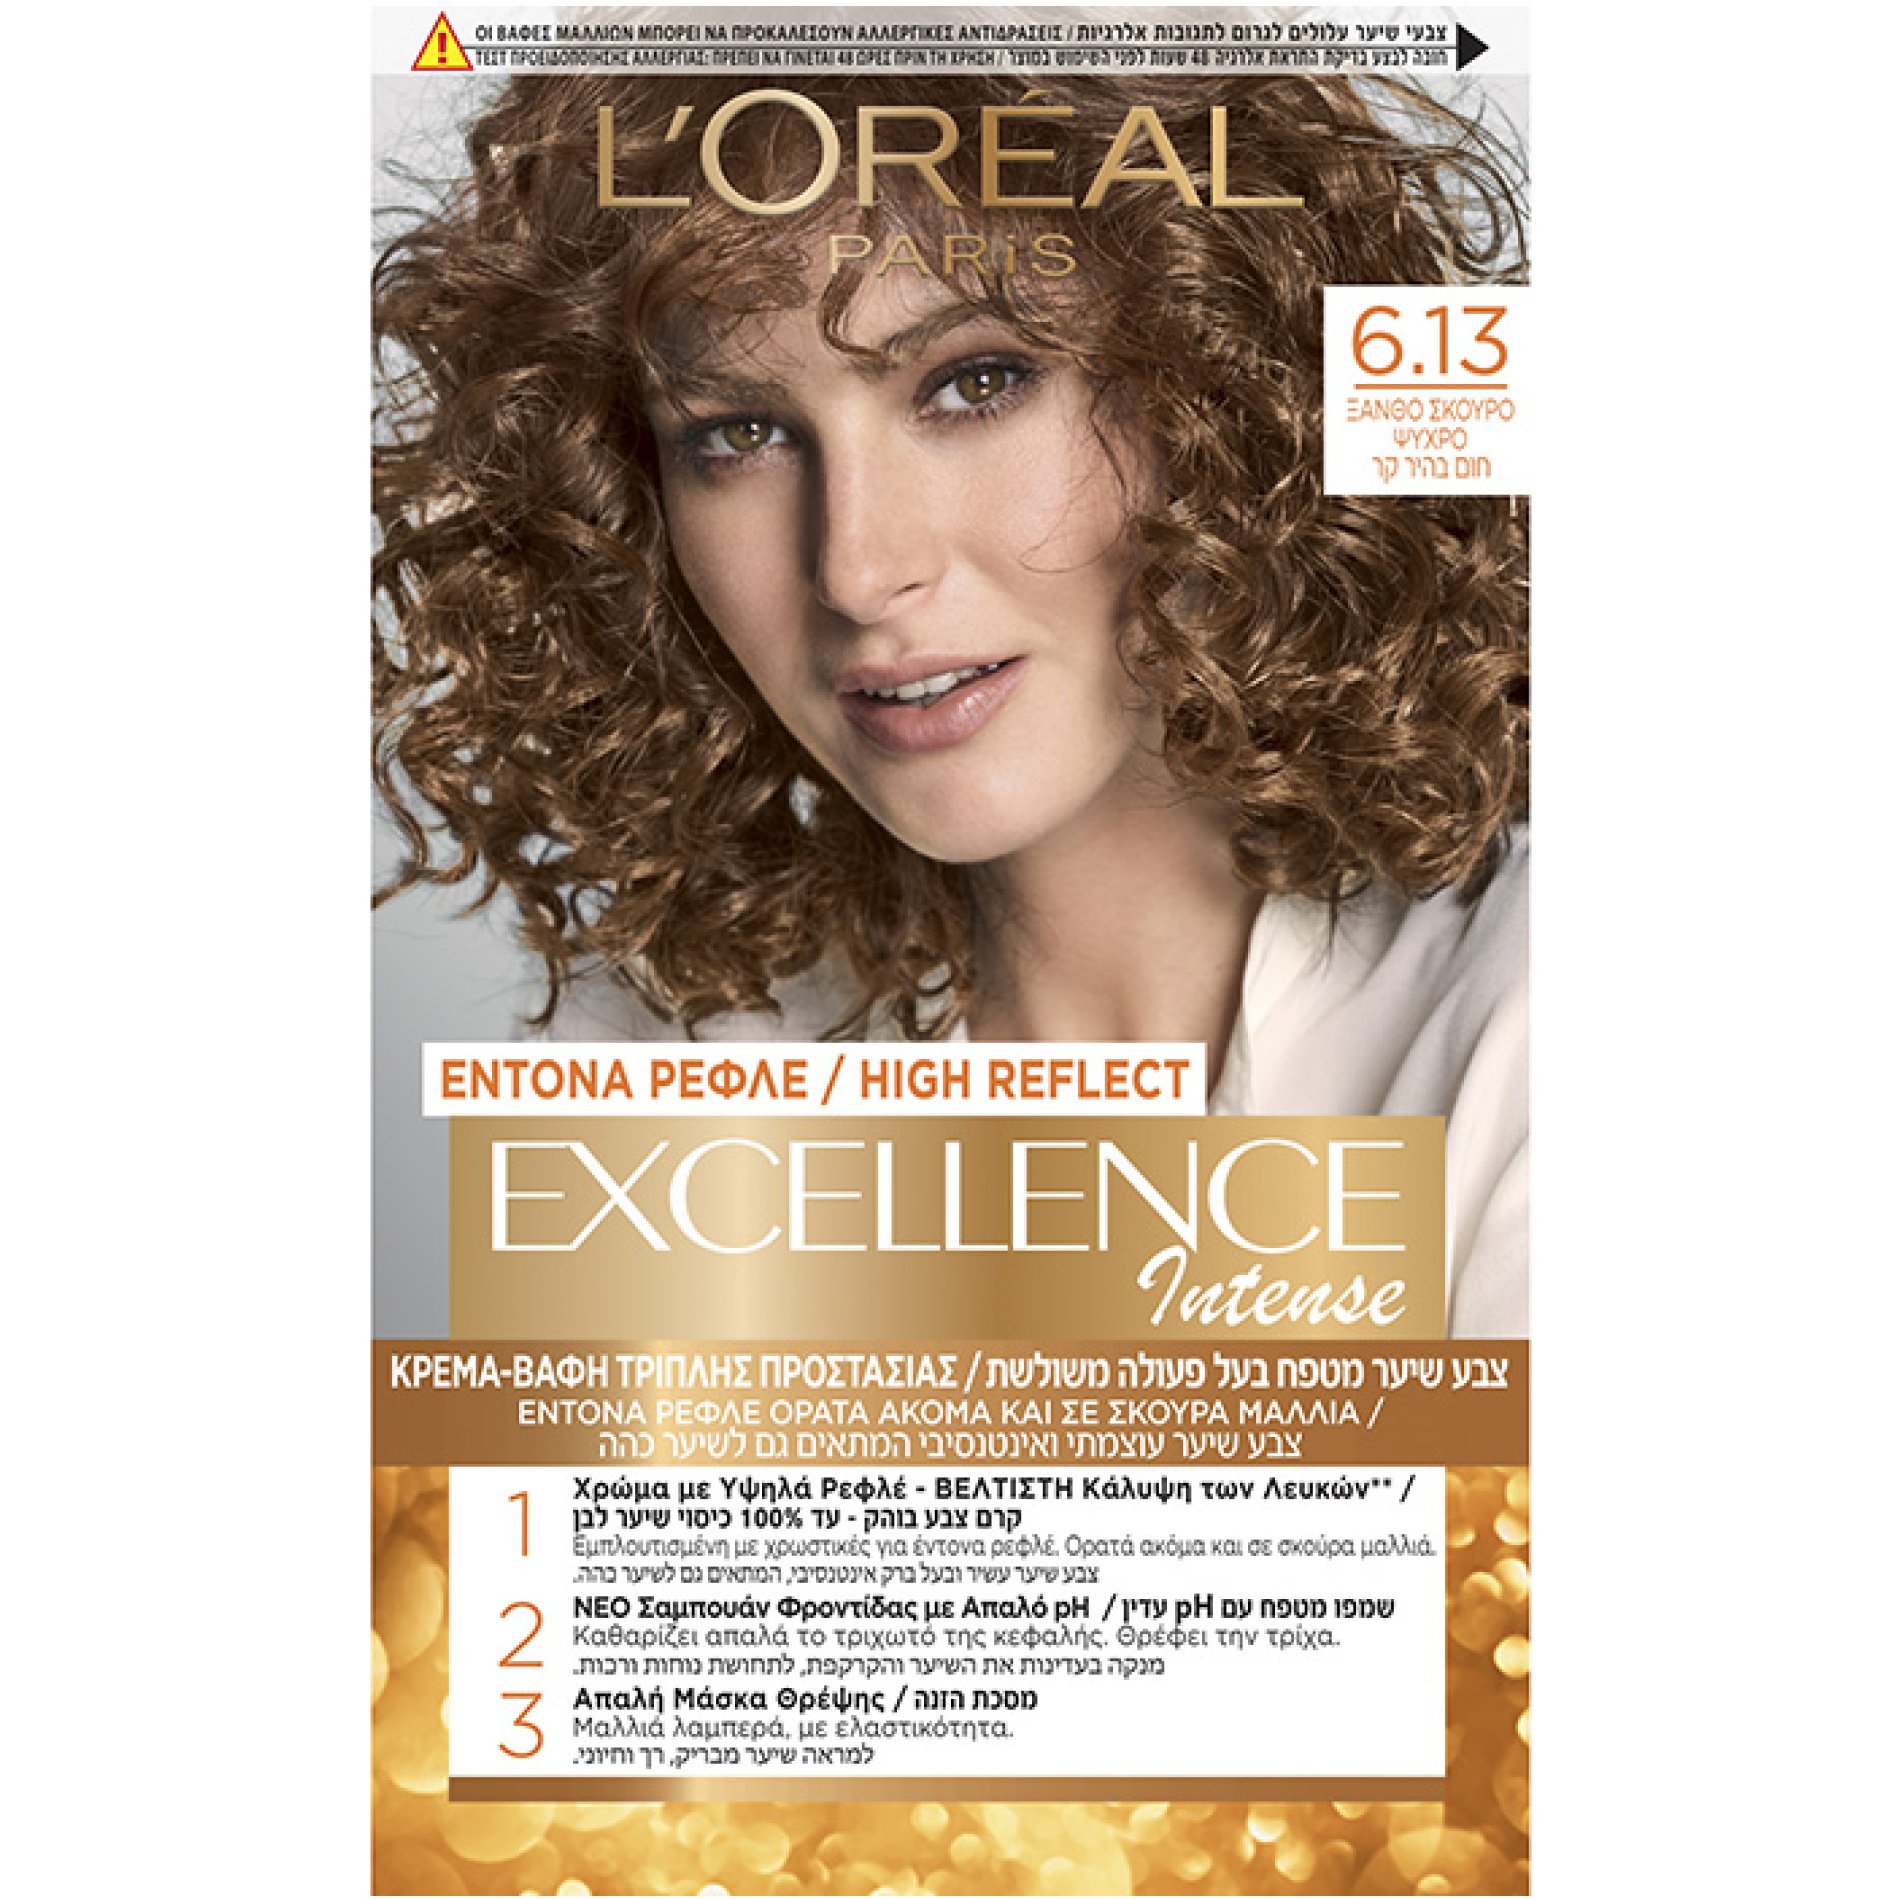 L’oreal Paris Excellence Intense Βαφή Μαλλιών Μόνιμη Κρέμα – Βαφή με Τριπλή Προστασία & Κάλυψη των Λευκών 1 Τεμάχιο – 6.13 Ξανθό Σκούρο Ψυχρό